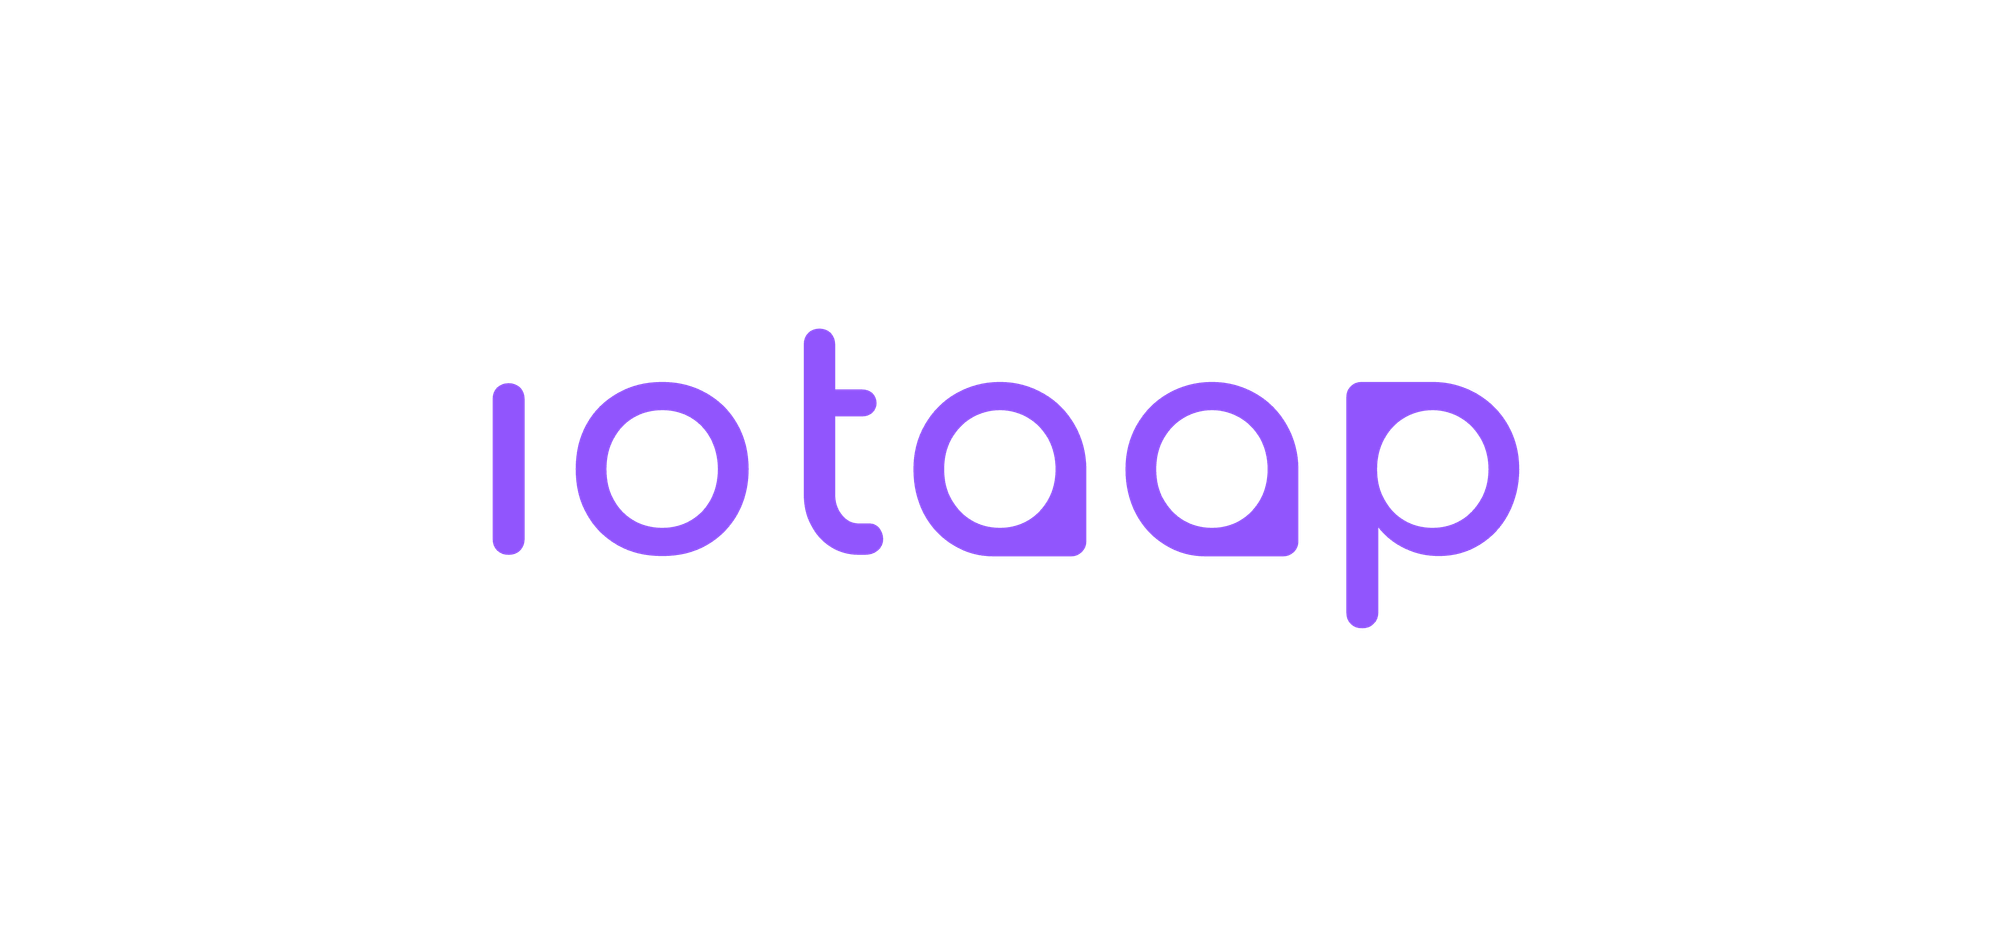 iotaap - Smart Sensor Digitalization Blog